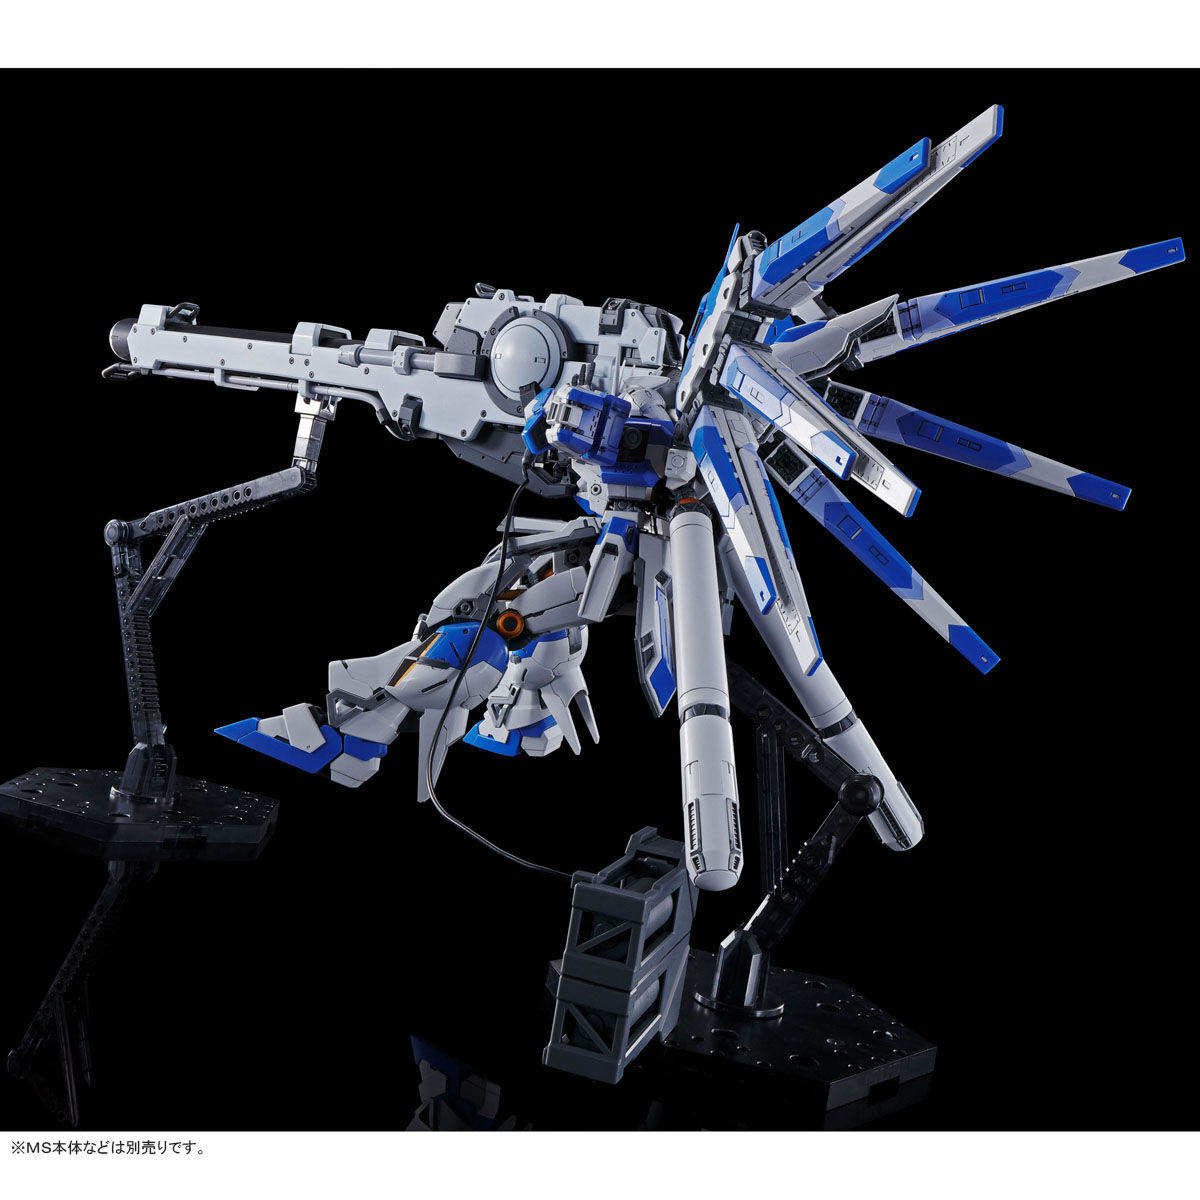 RG 1/144 Hyper Mega Bazooka Launcher for RX-93-ν2 Hi-ν Gundam